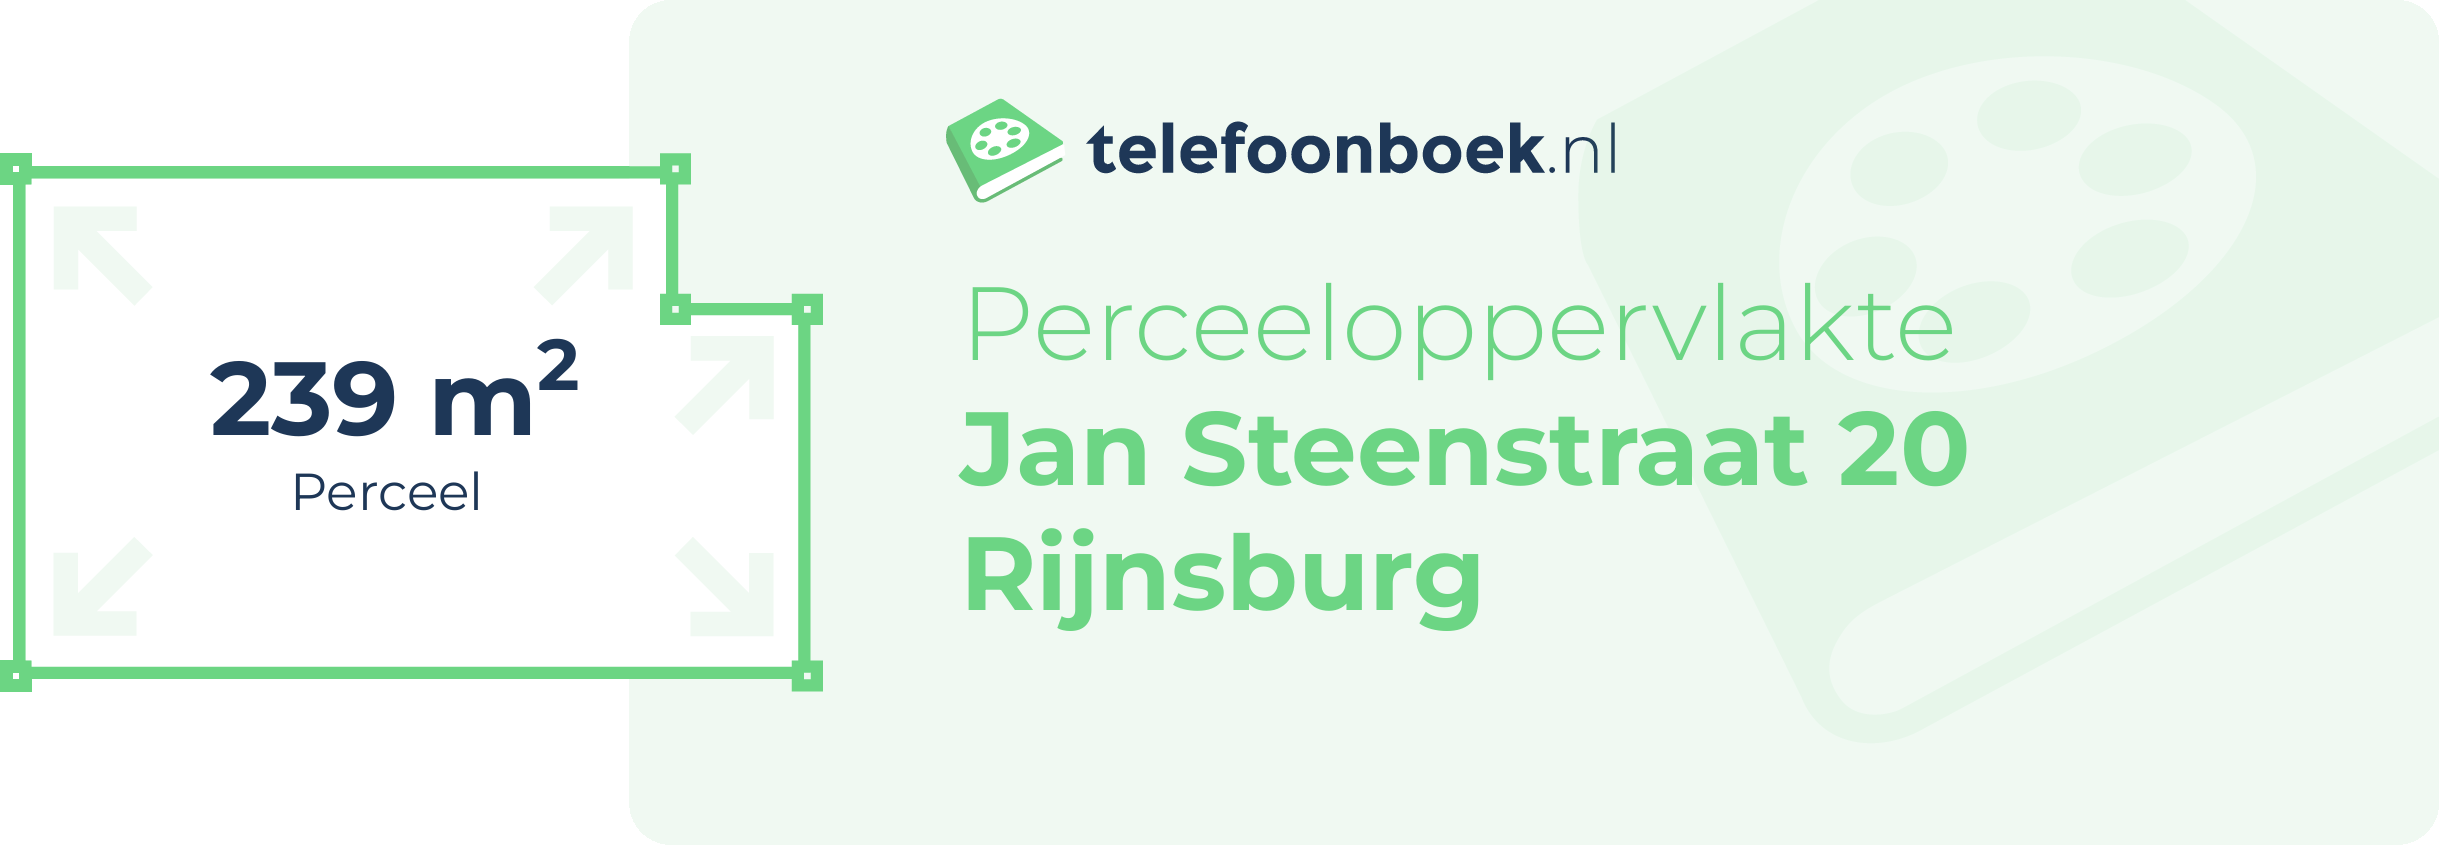 Perceeloppervlakte Jan Steenstraat 20 Rijnsburg